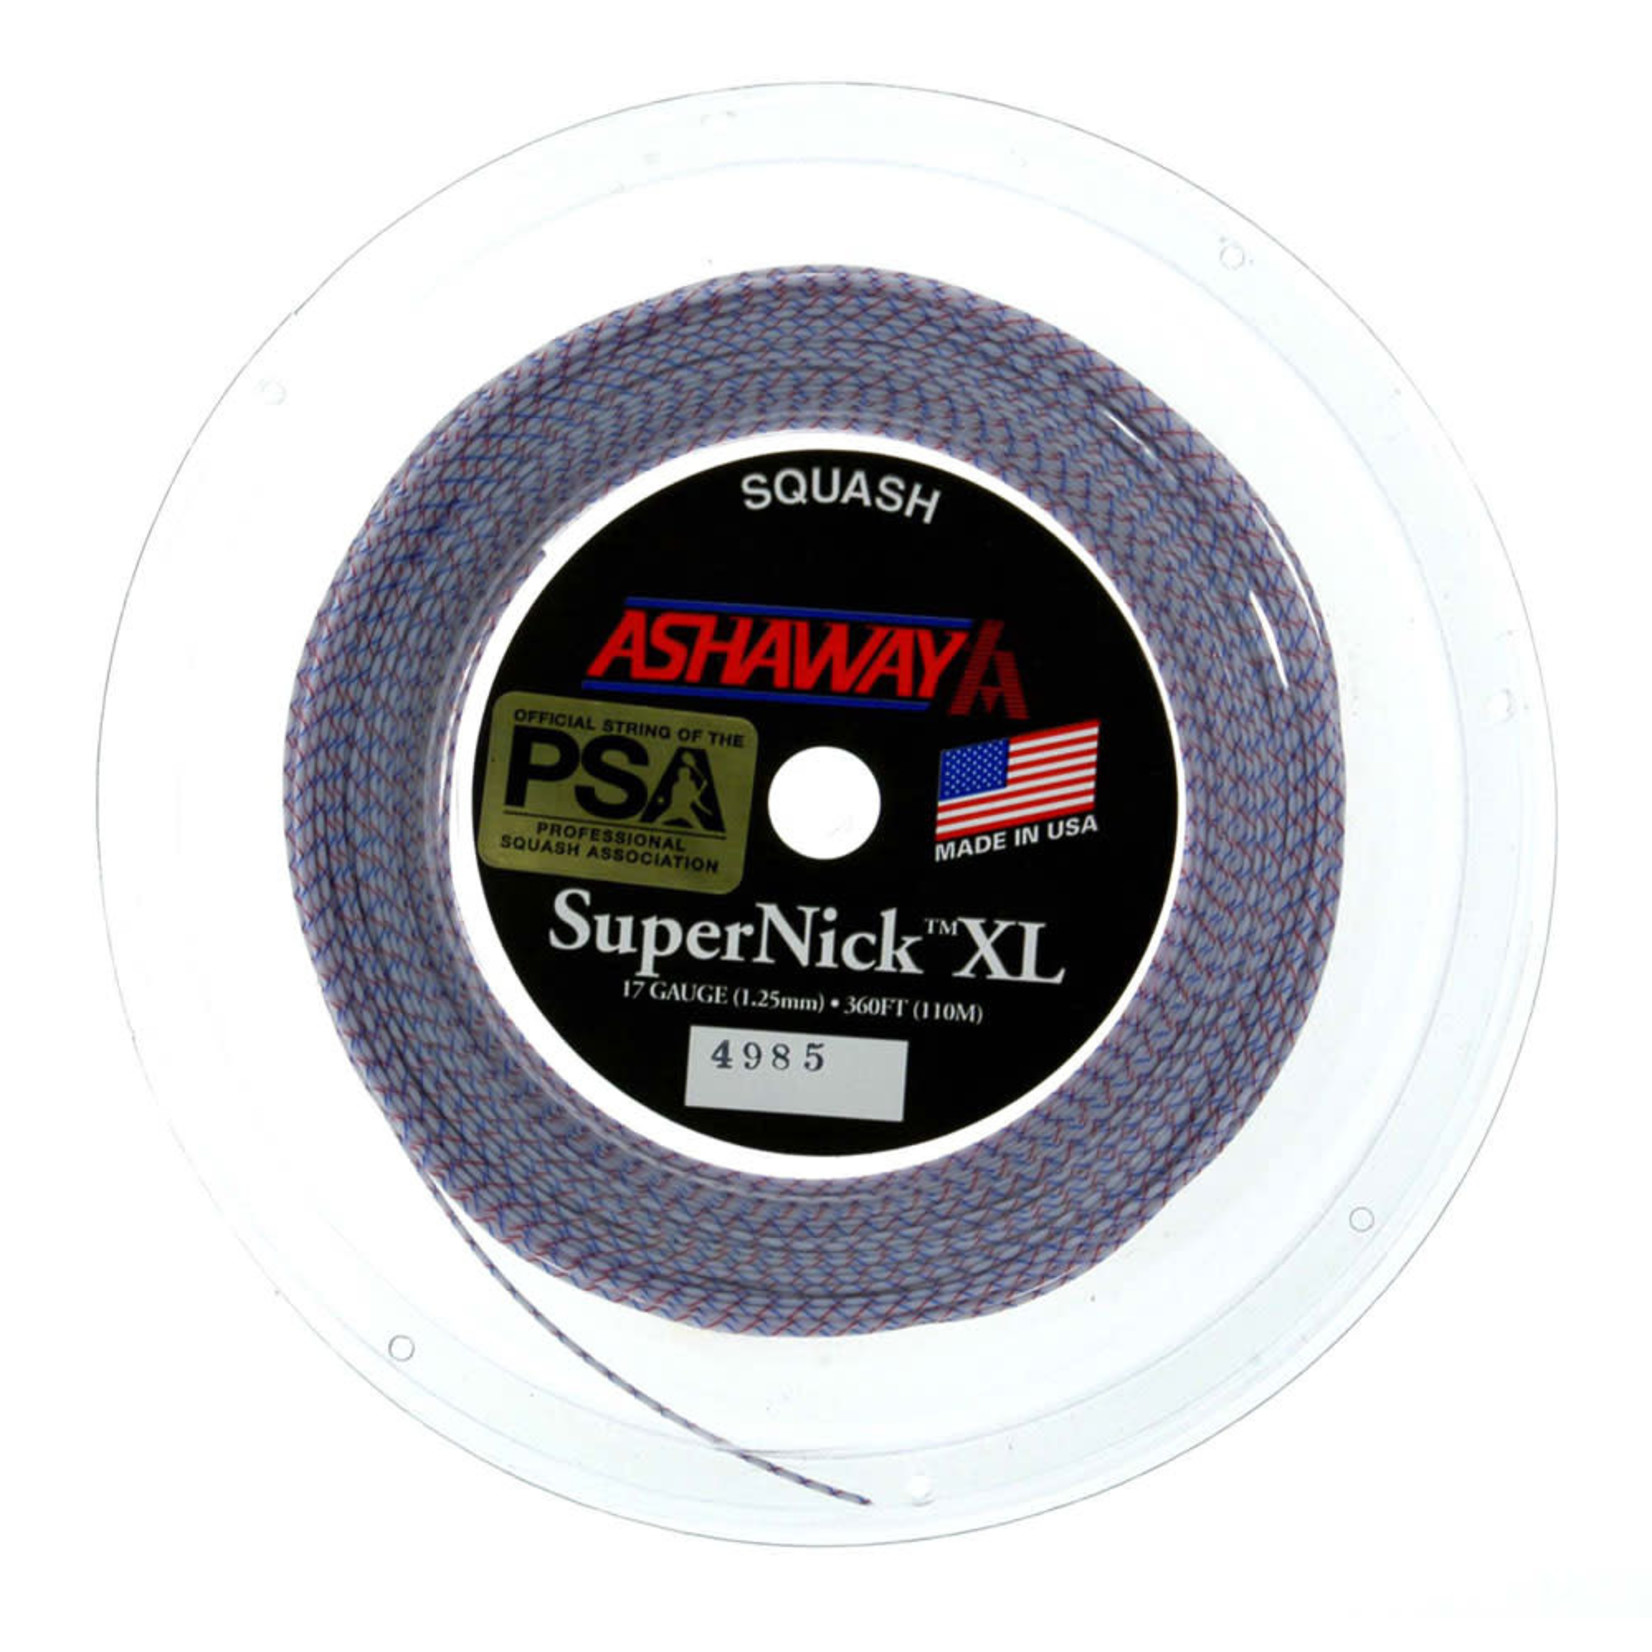 Ashaway Ashaway SuperNick XL Squash String Reels (110m)